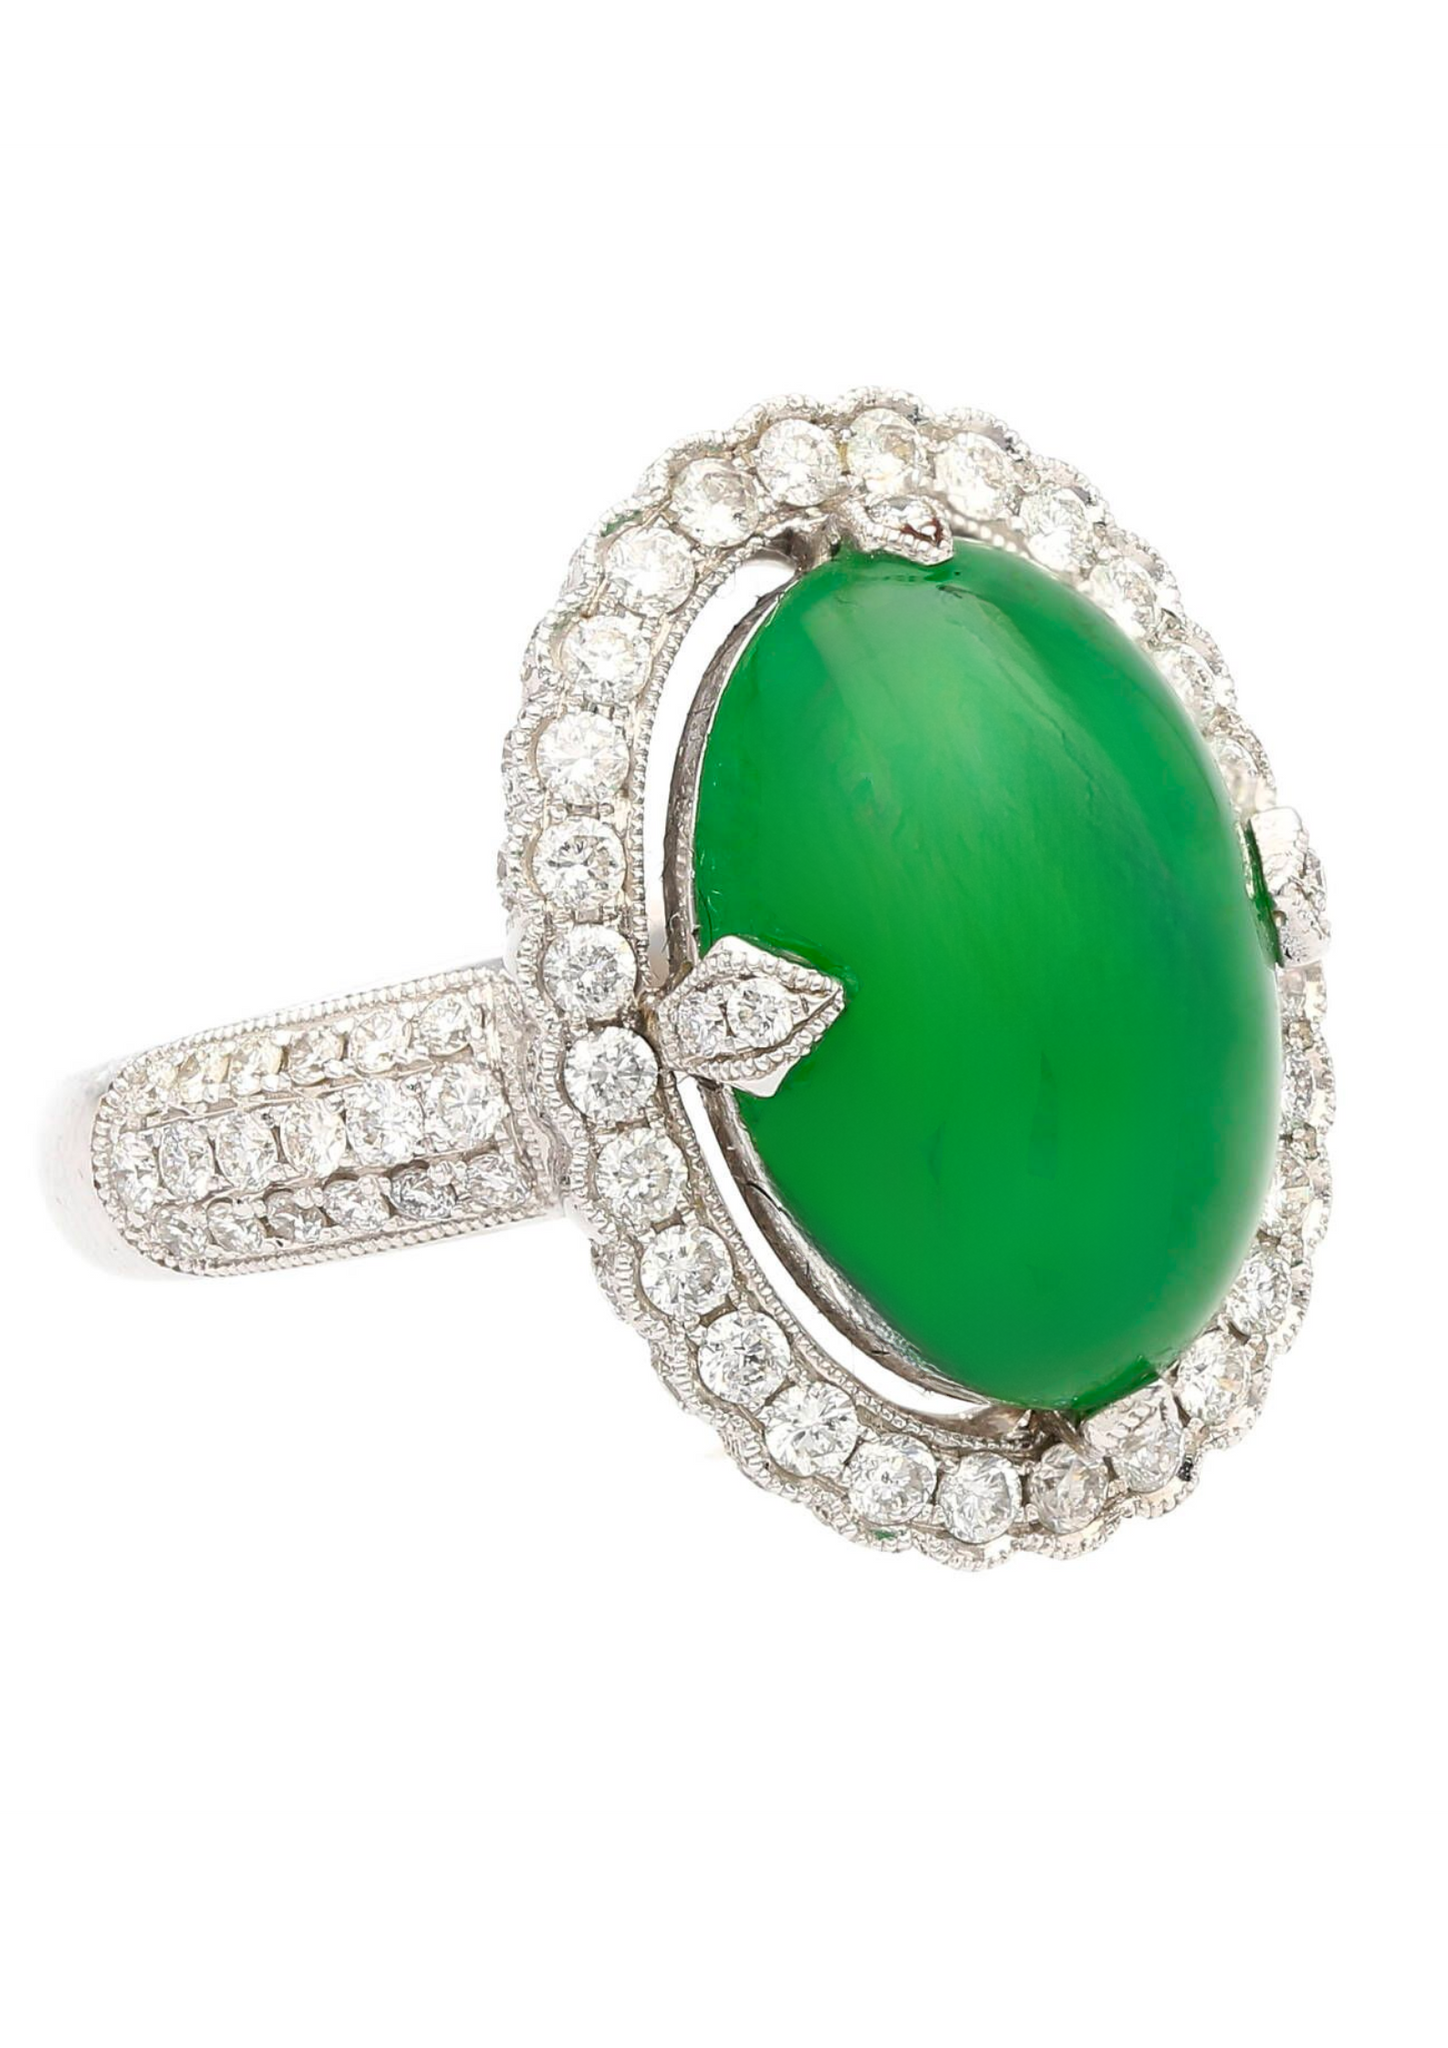 Vintage 7.29 Carat Jadeite Jade "A" Ring with Round Cut Diamond Halo & 18K Milgrain Finish